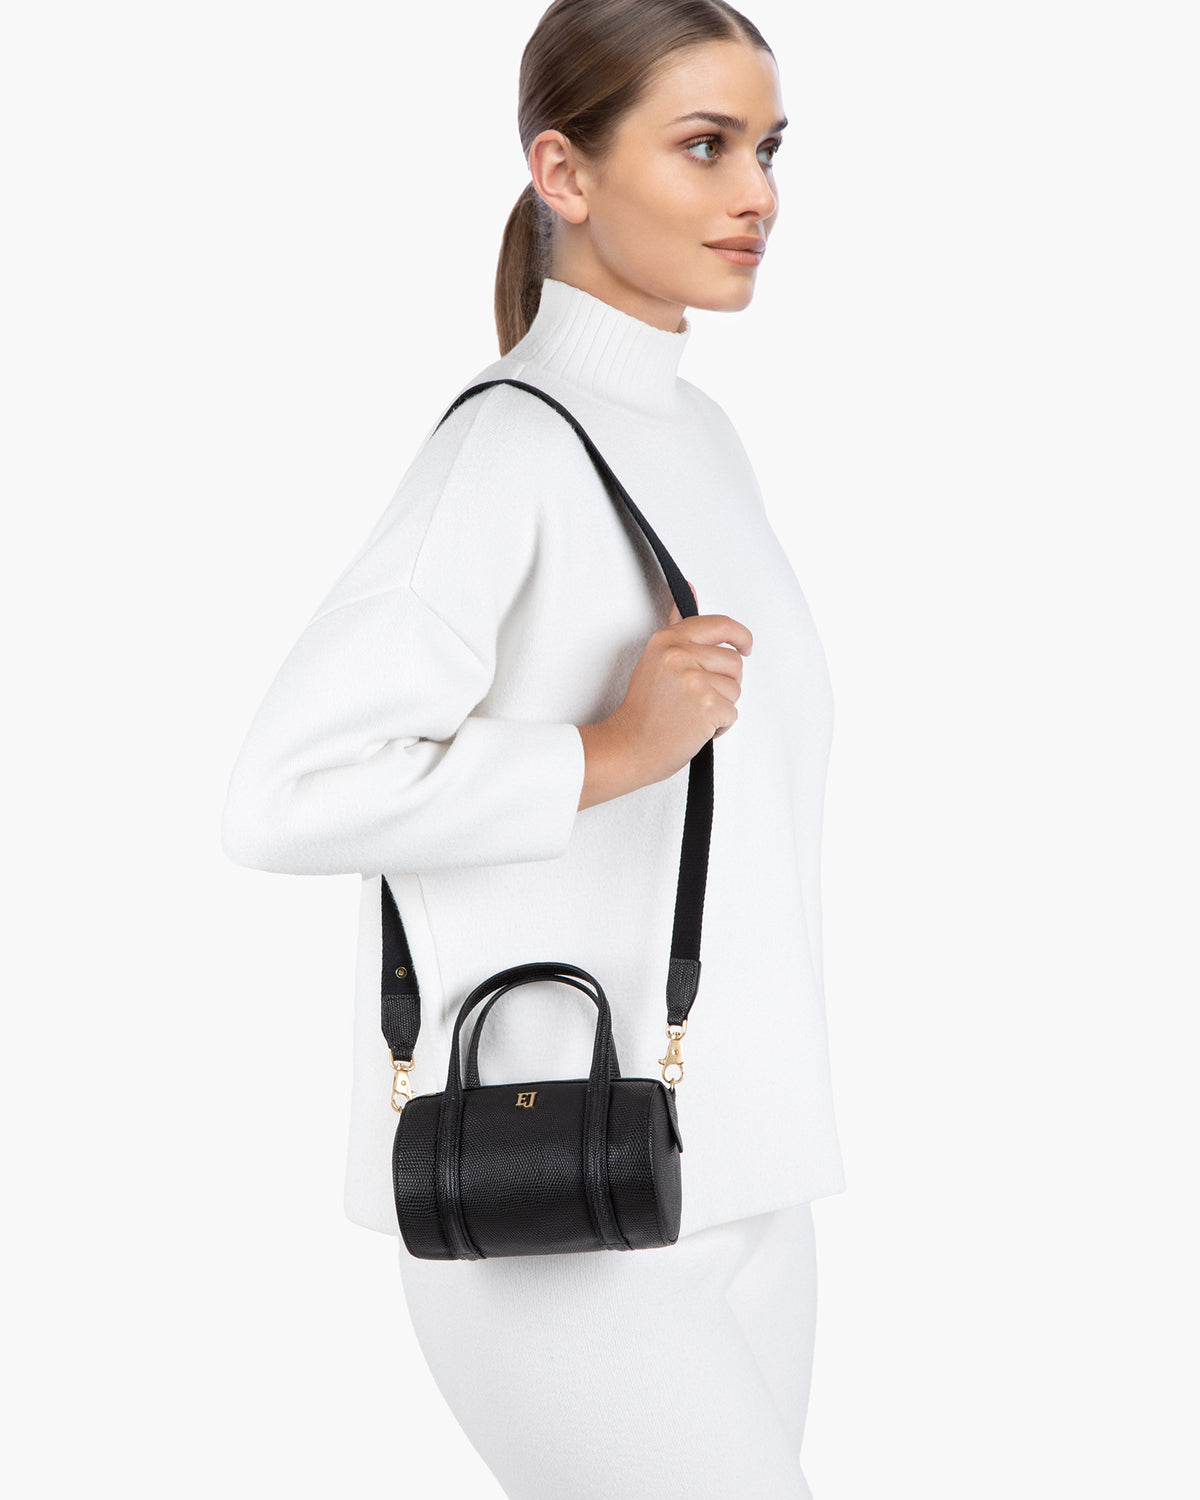 Askrykins Fashionable Mini Duffle Bag in Black